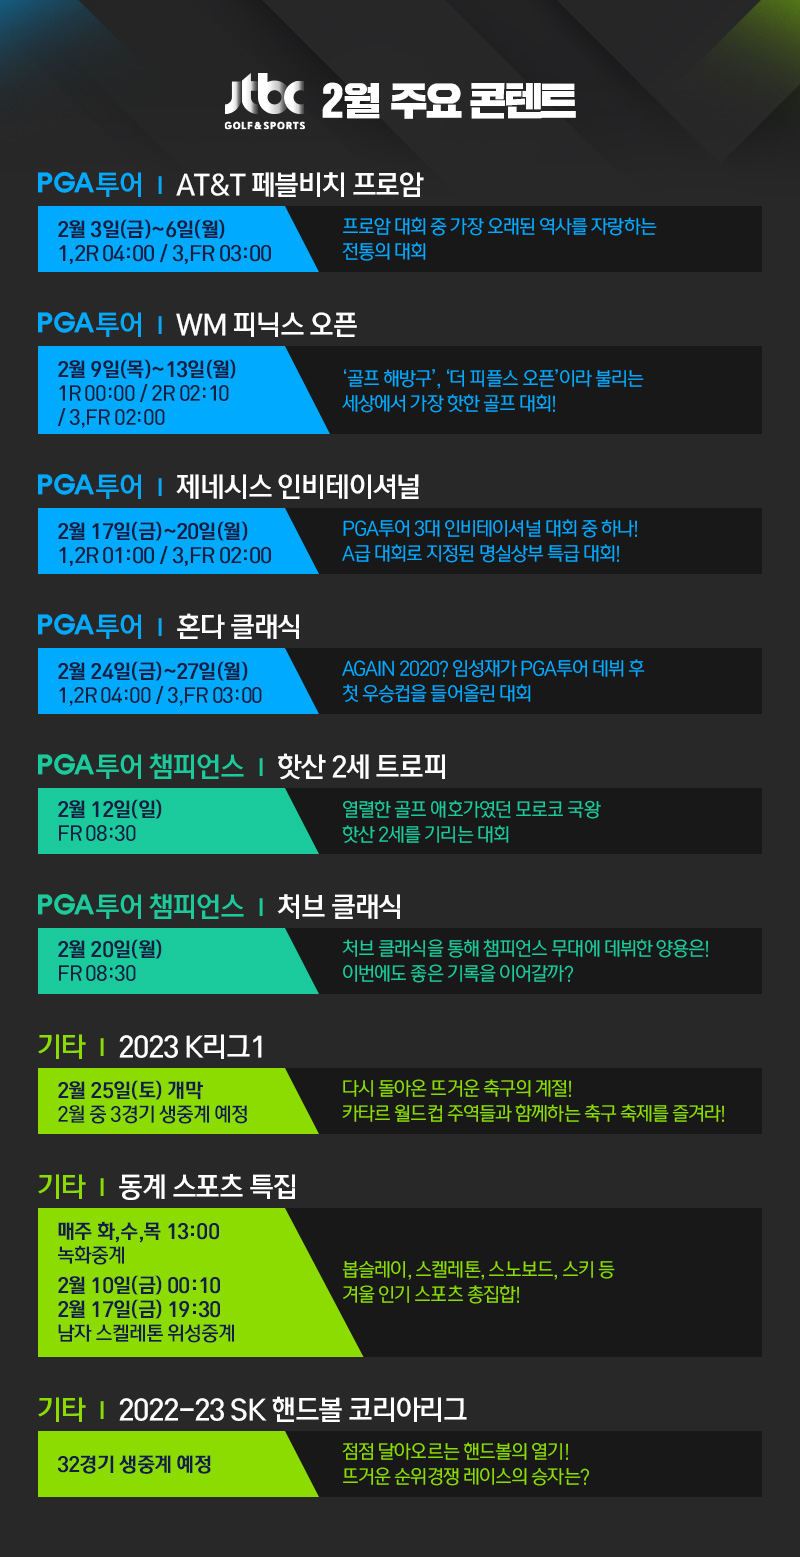 JTBC GOLF&SPORTS 2월 주요 콘텐트